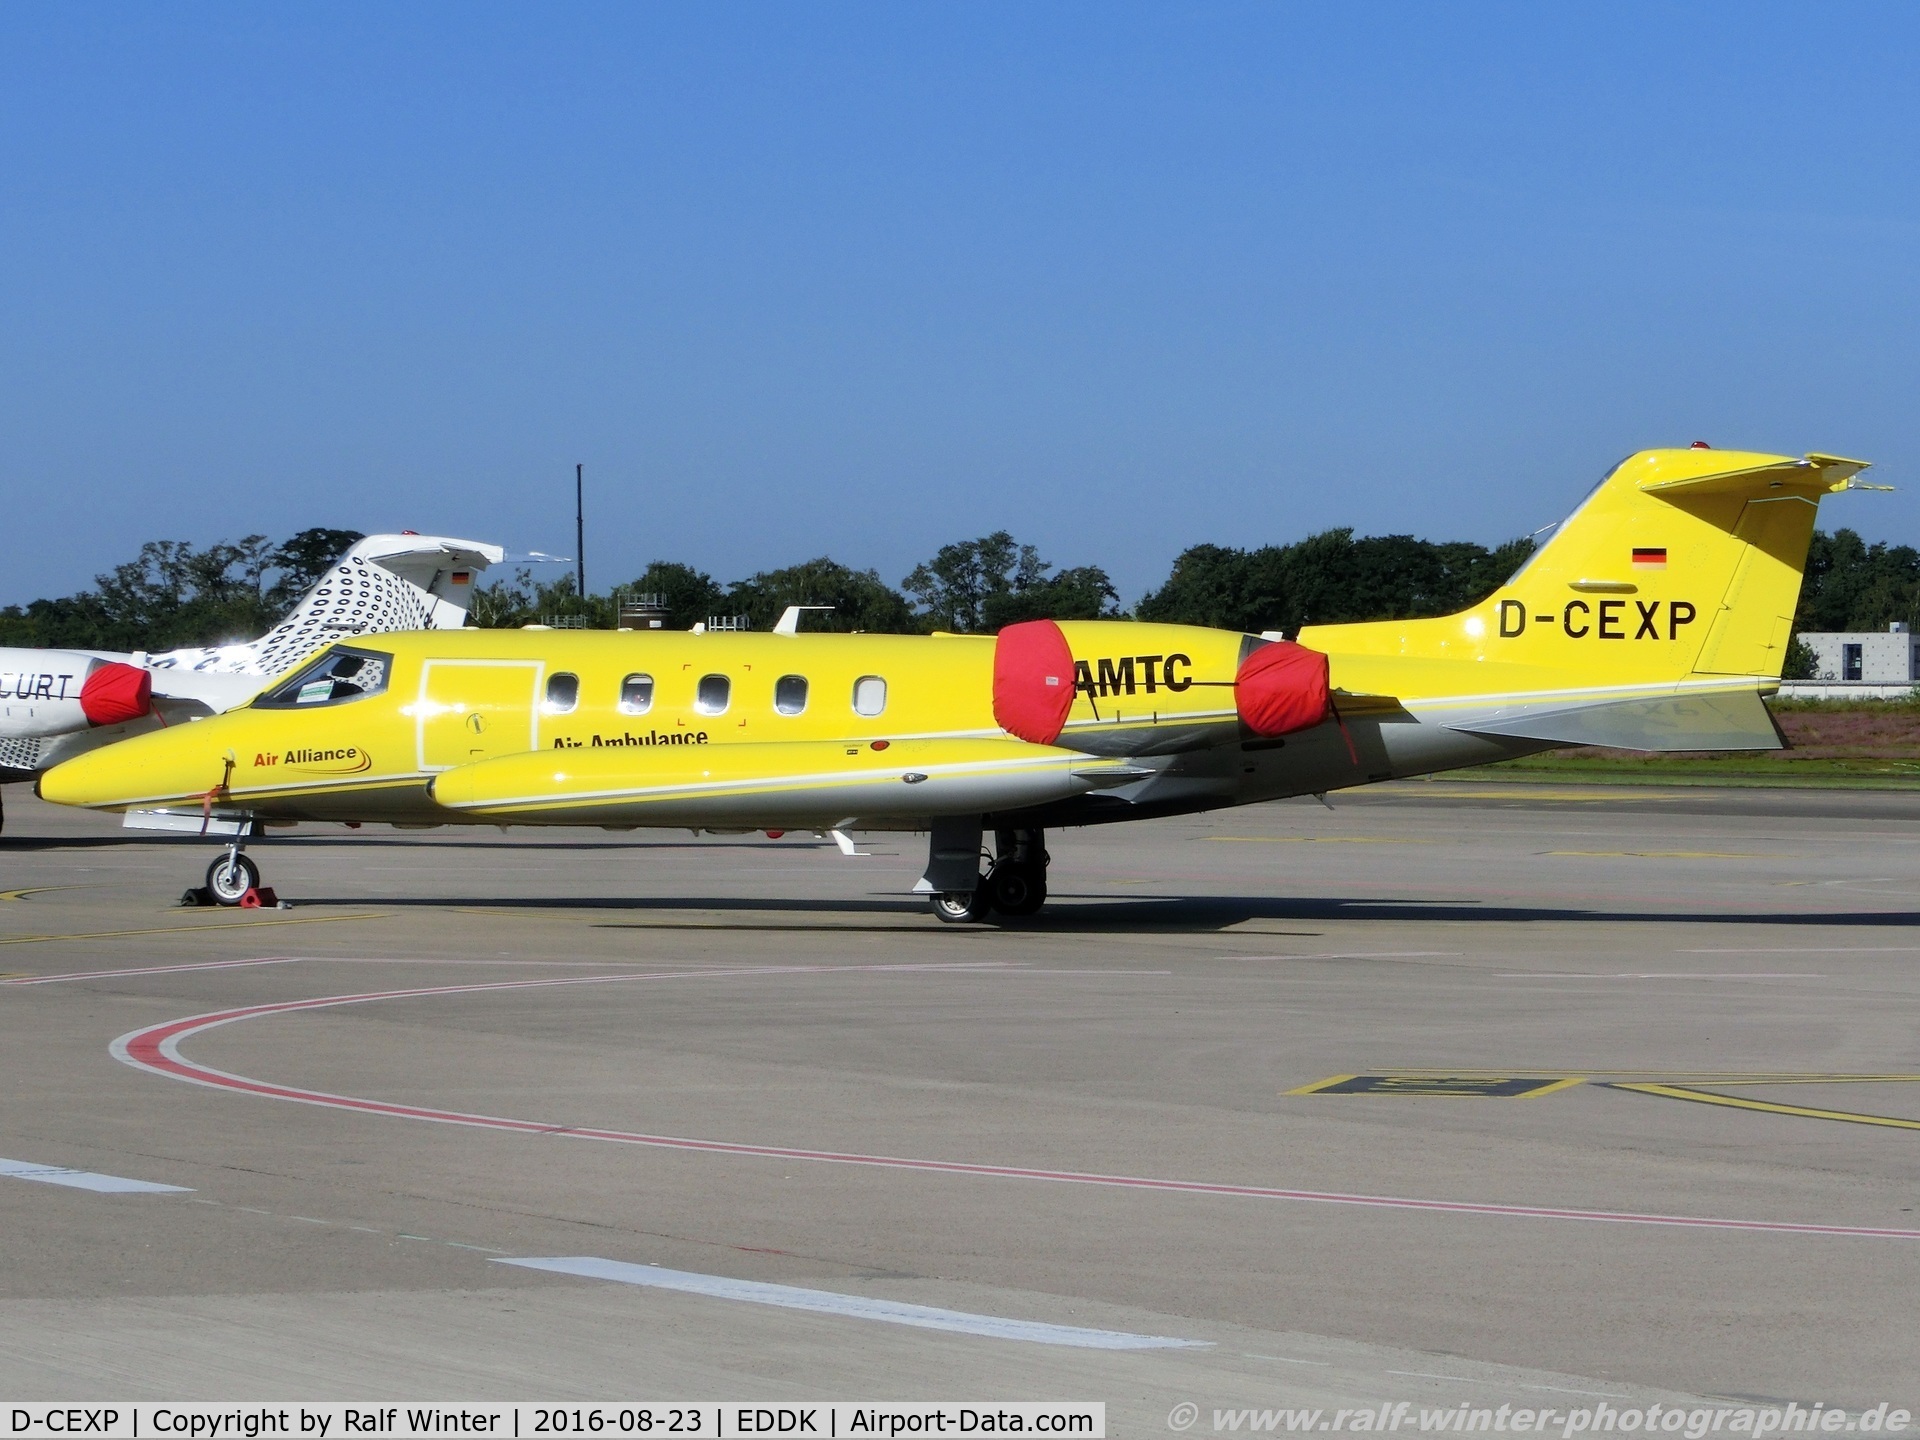 D-CEXP, 1986 Gates Learjet 35A C/N 616, Learjet 35A - AYY Air Alliance Express - 35-616 - D-CEXP - 23.08.2016 - CGN